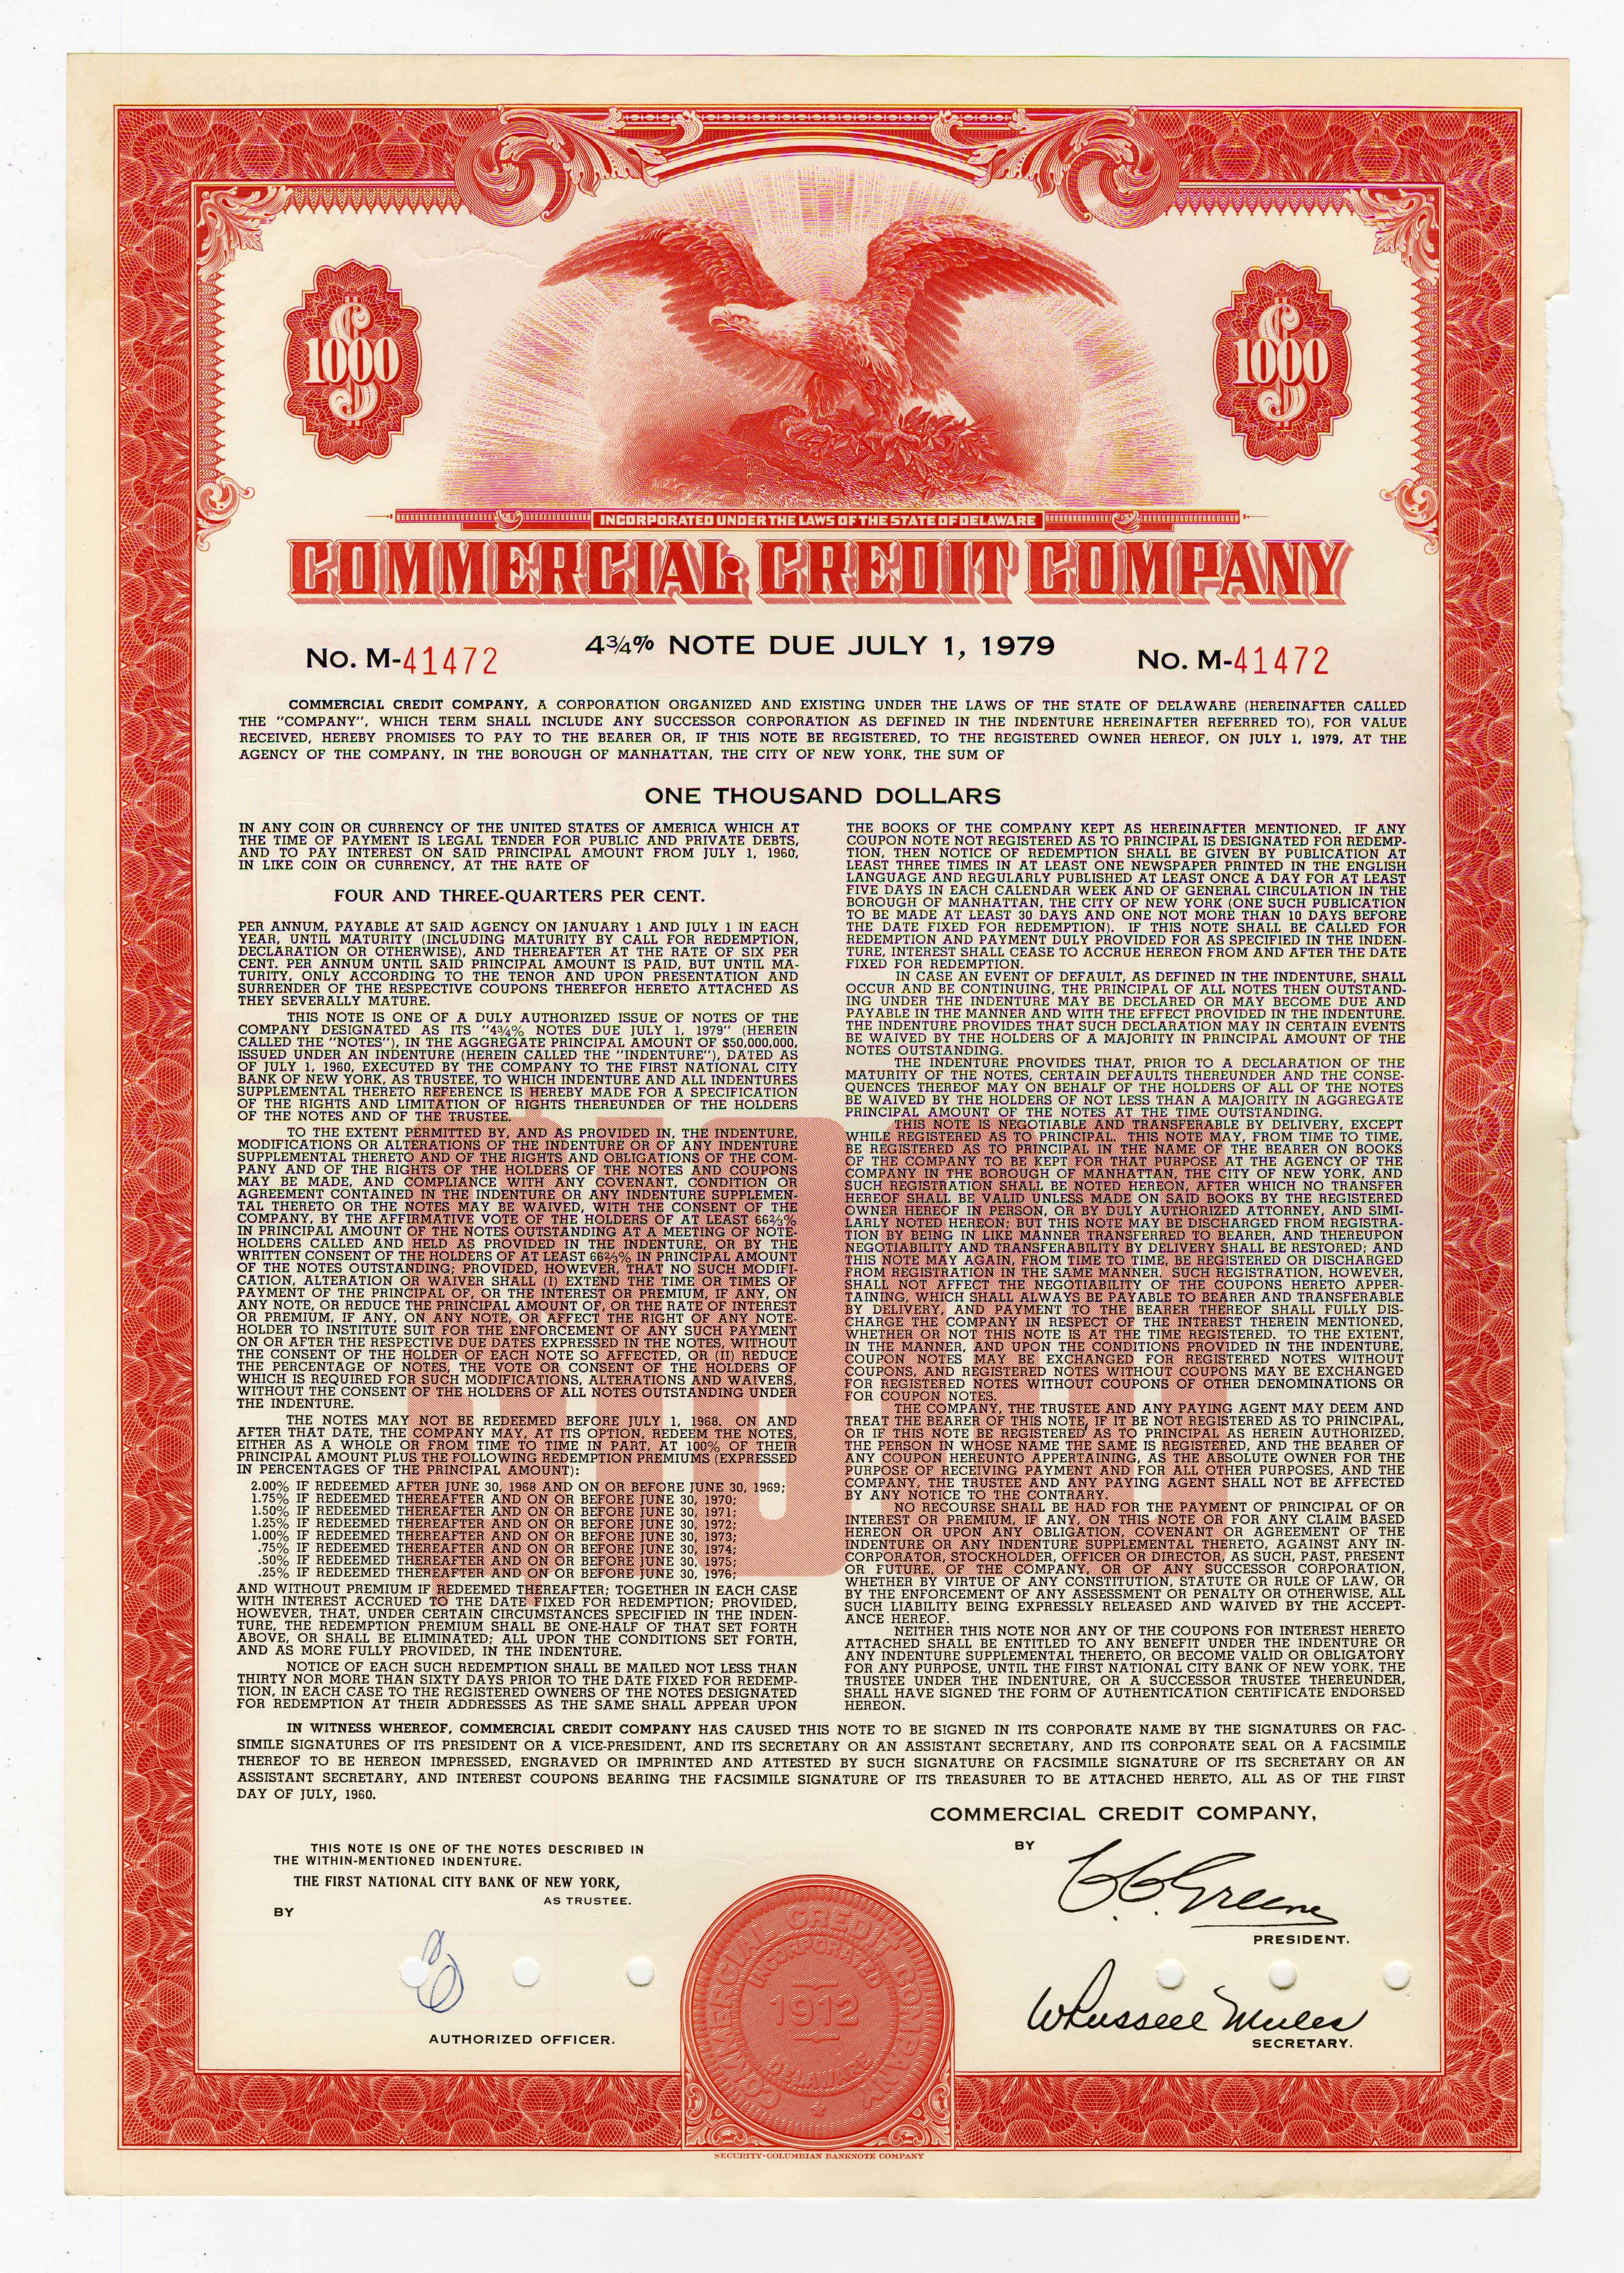 Obligacje Commercial Credit Company z 1 lipca 1960 roku.